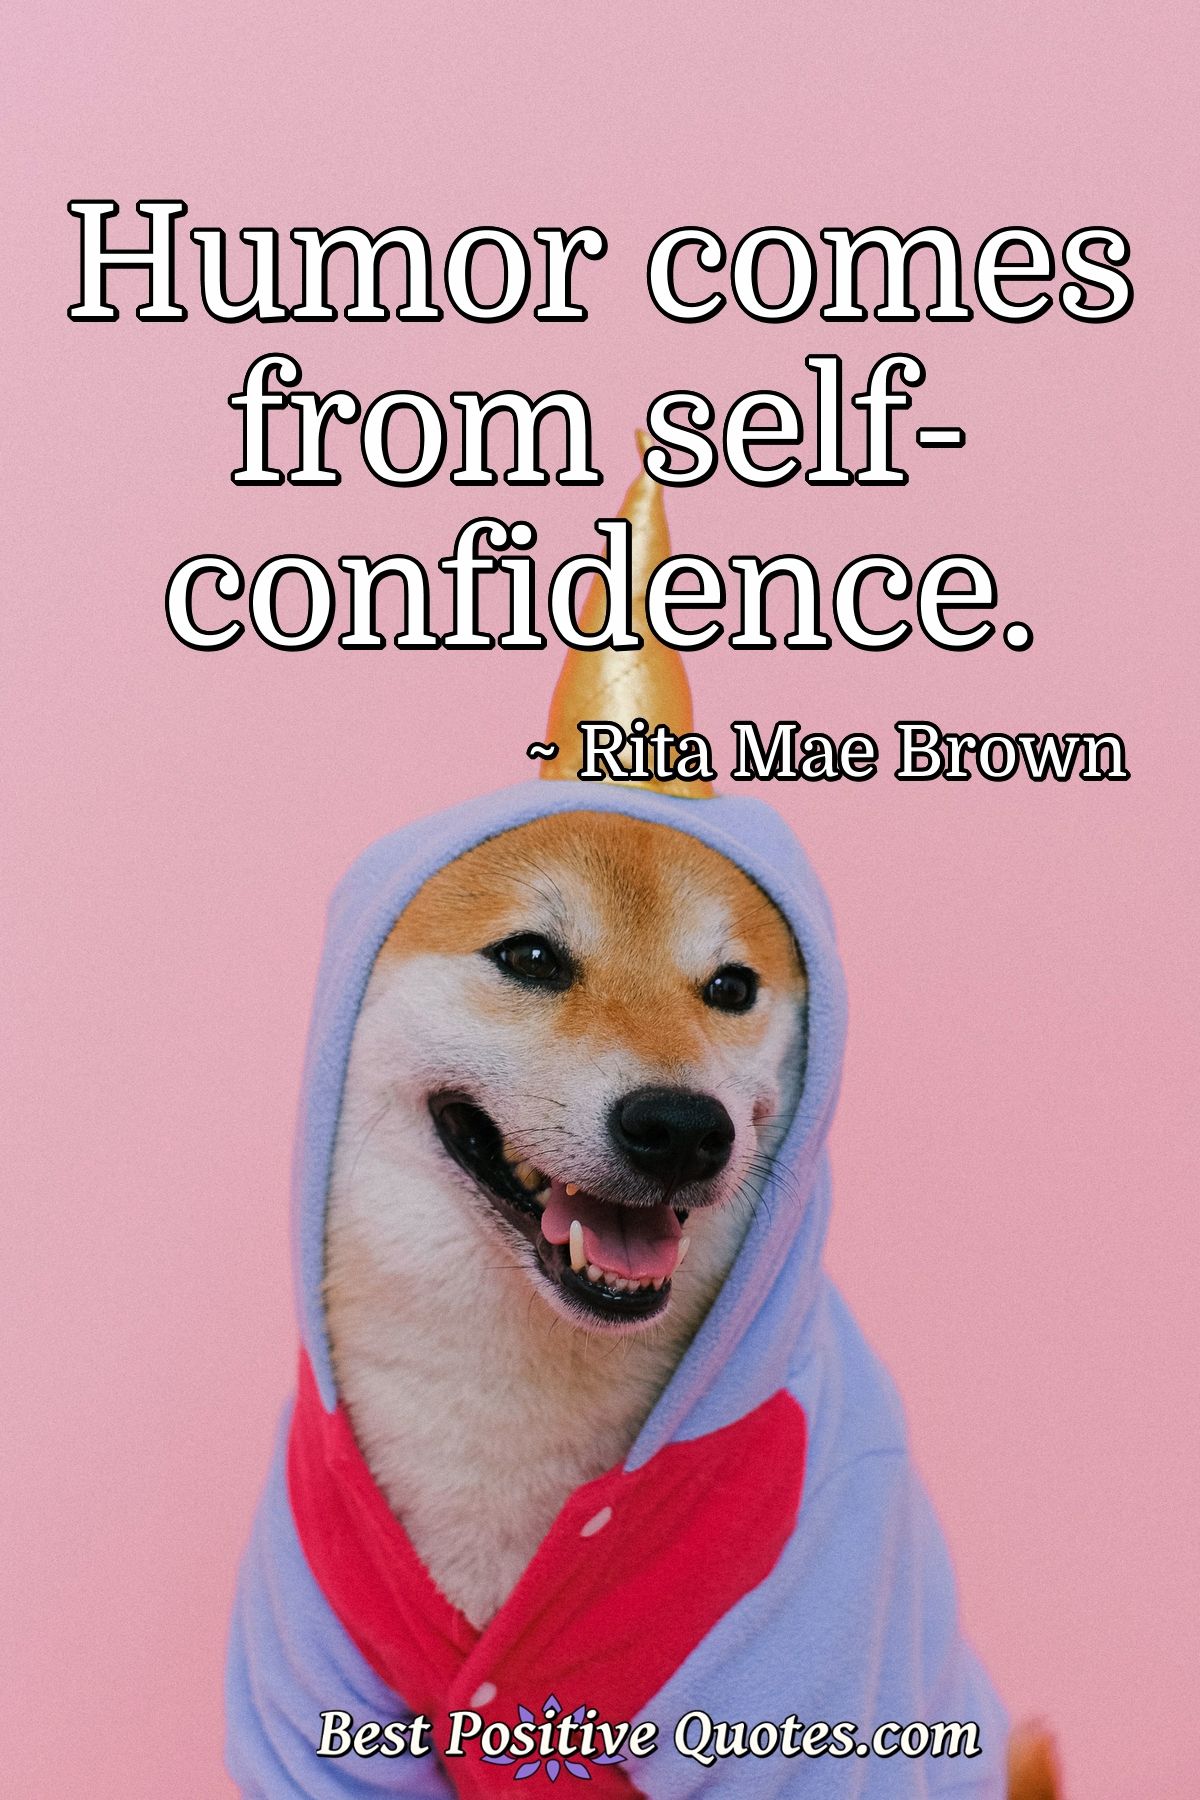 Humor comes from self-confidence. - Rita Mae Brown